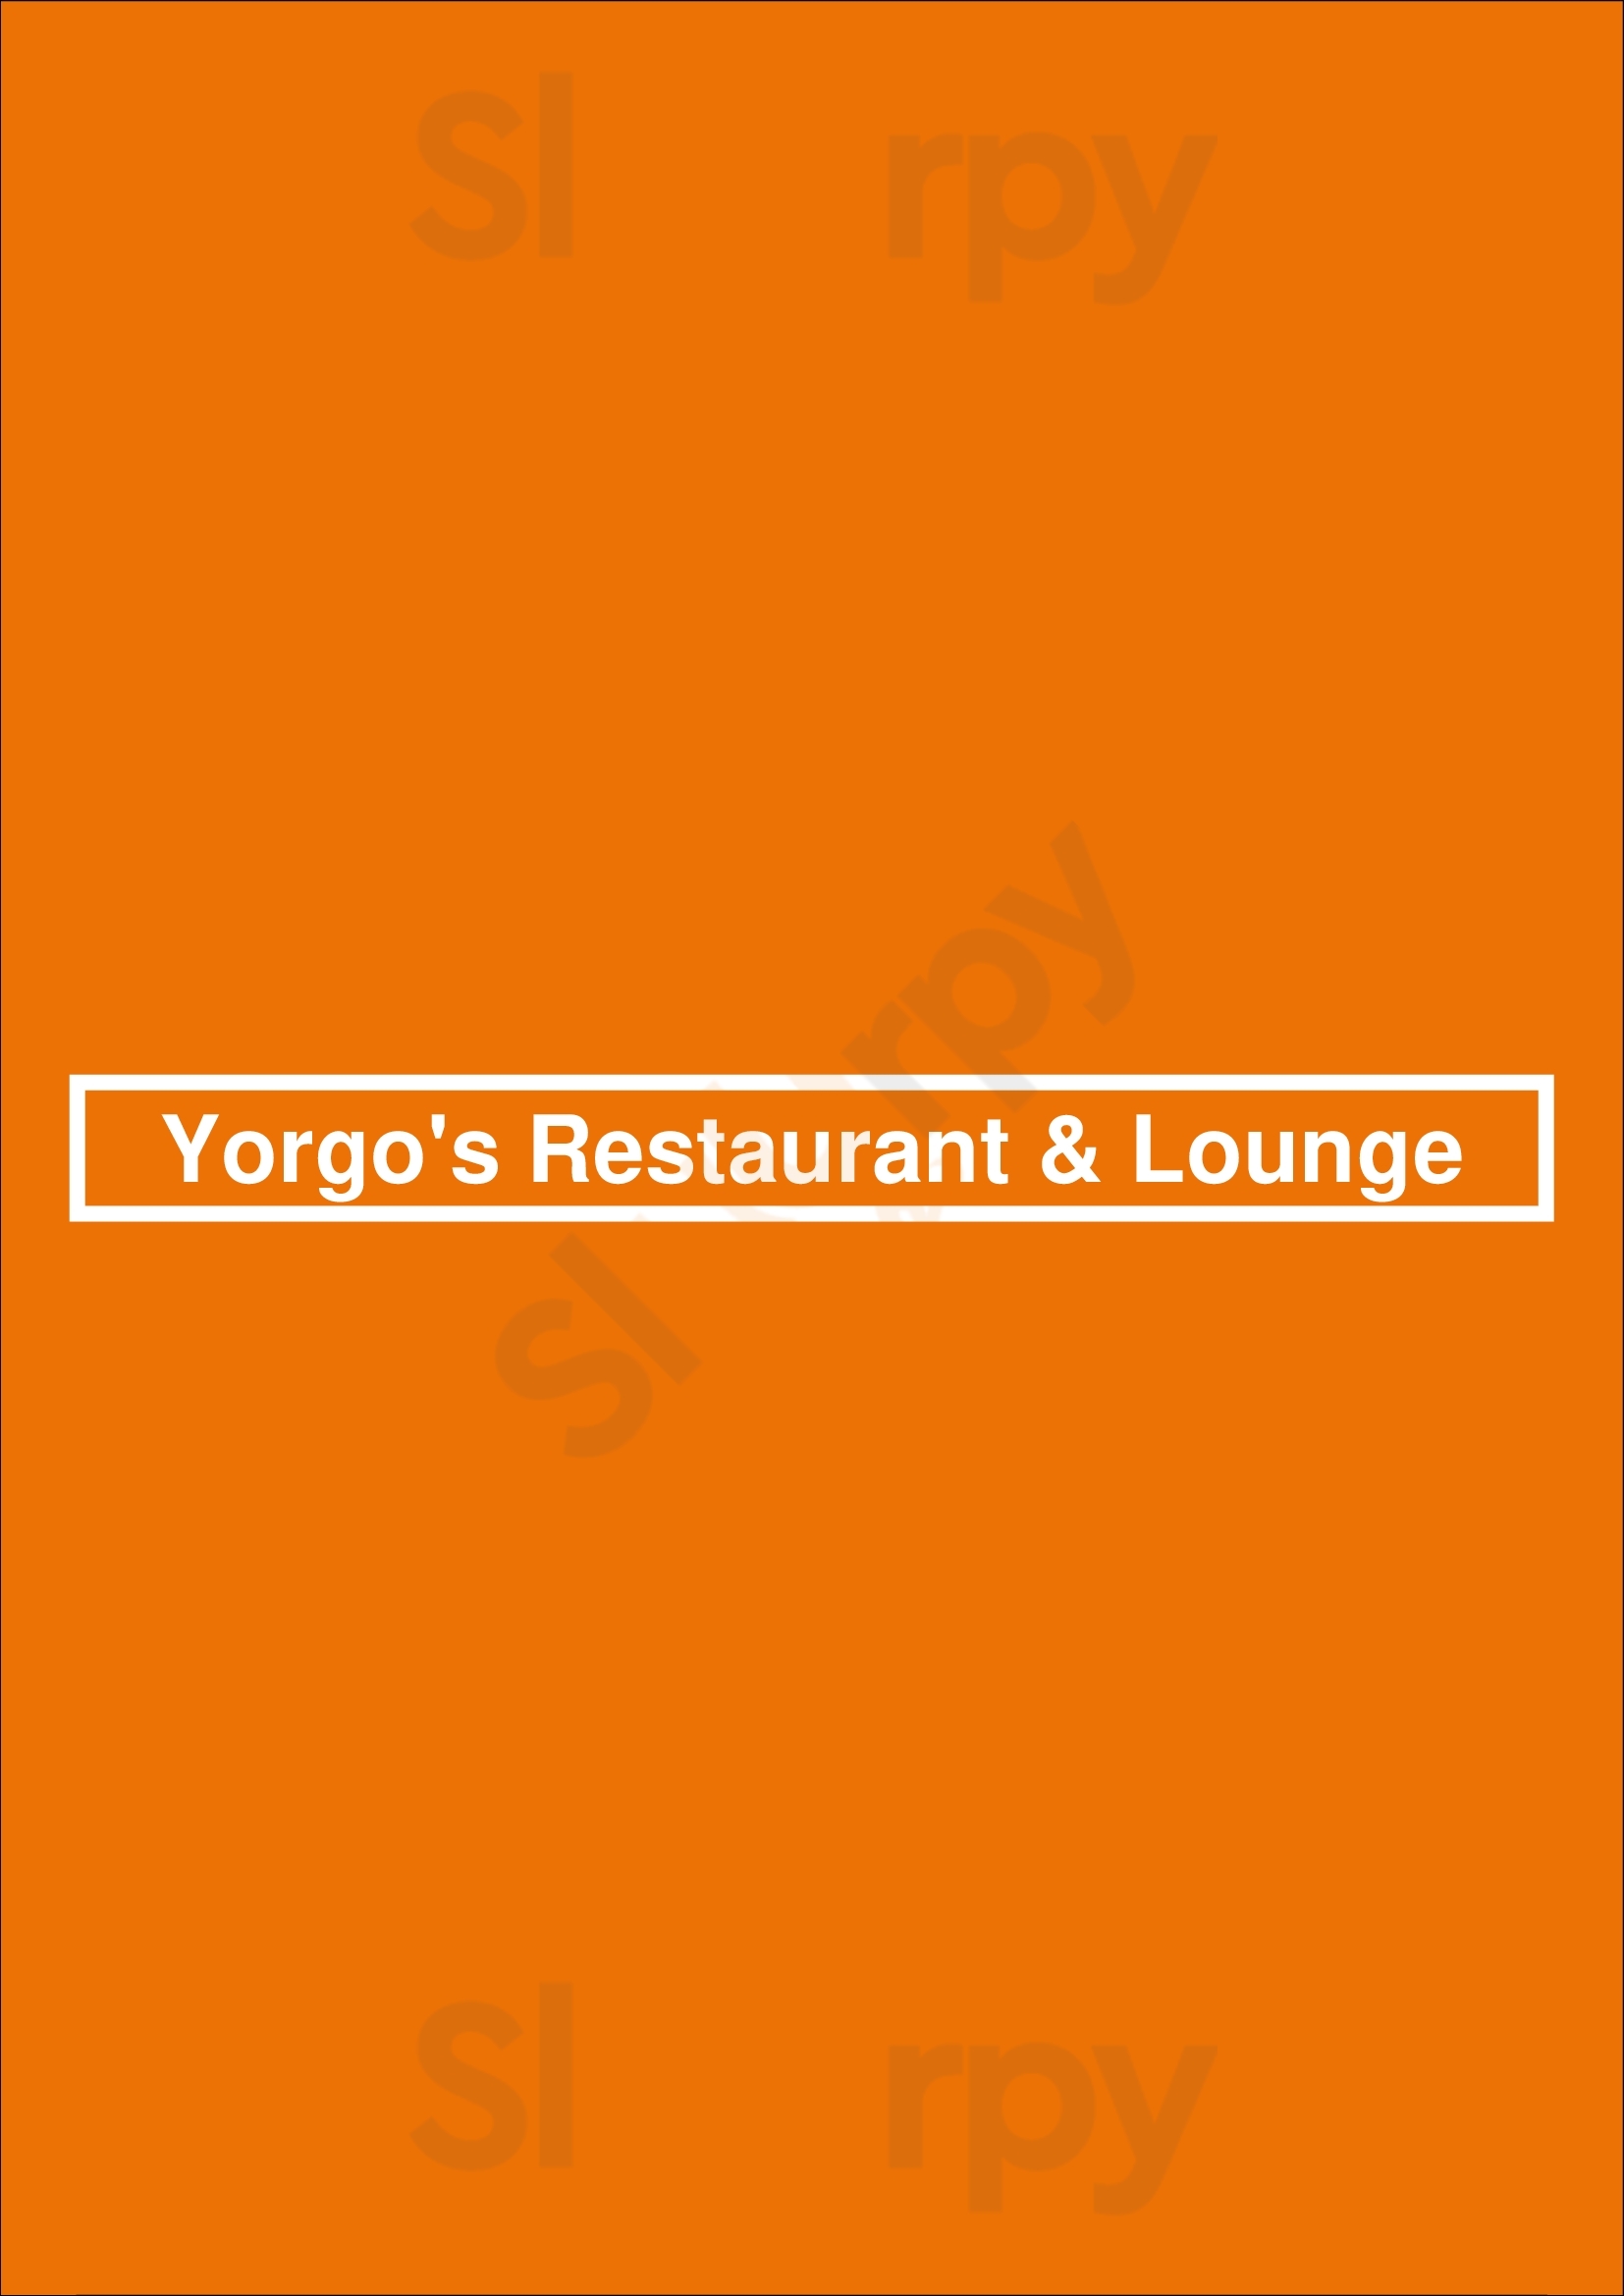 Yorgo's Restaurant & Lounge Lancaster Menu - 1